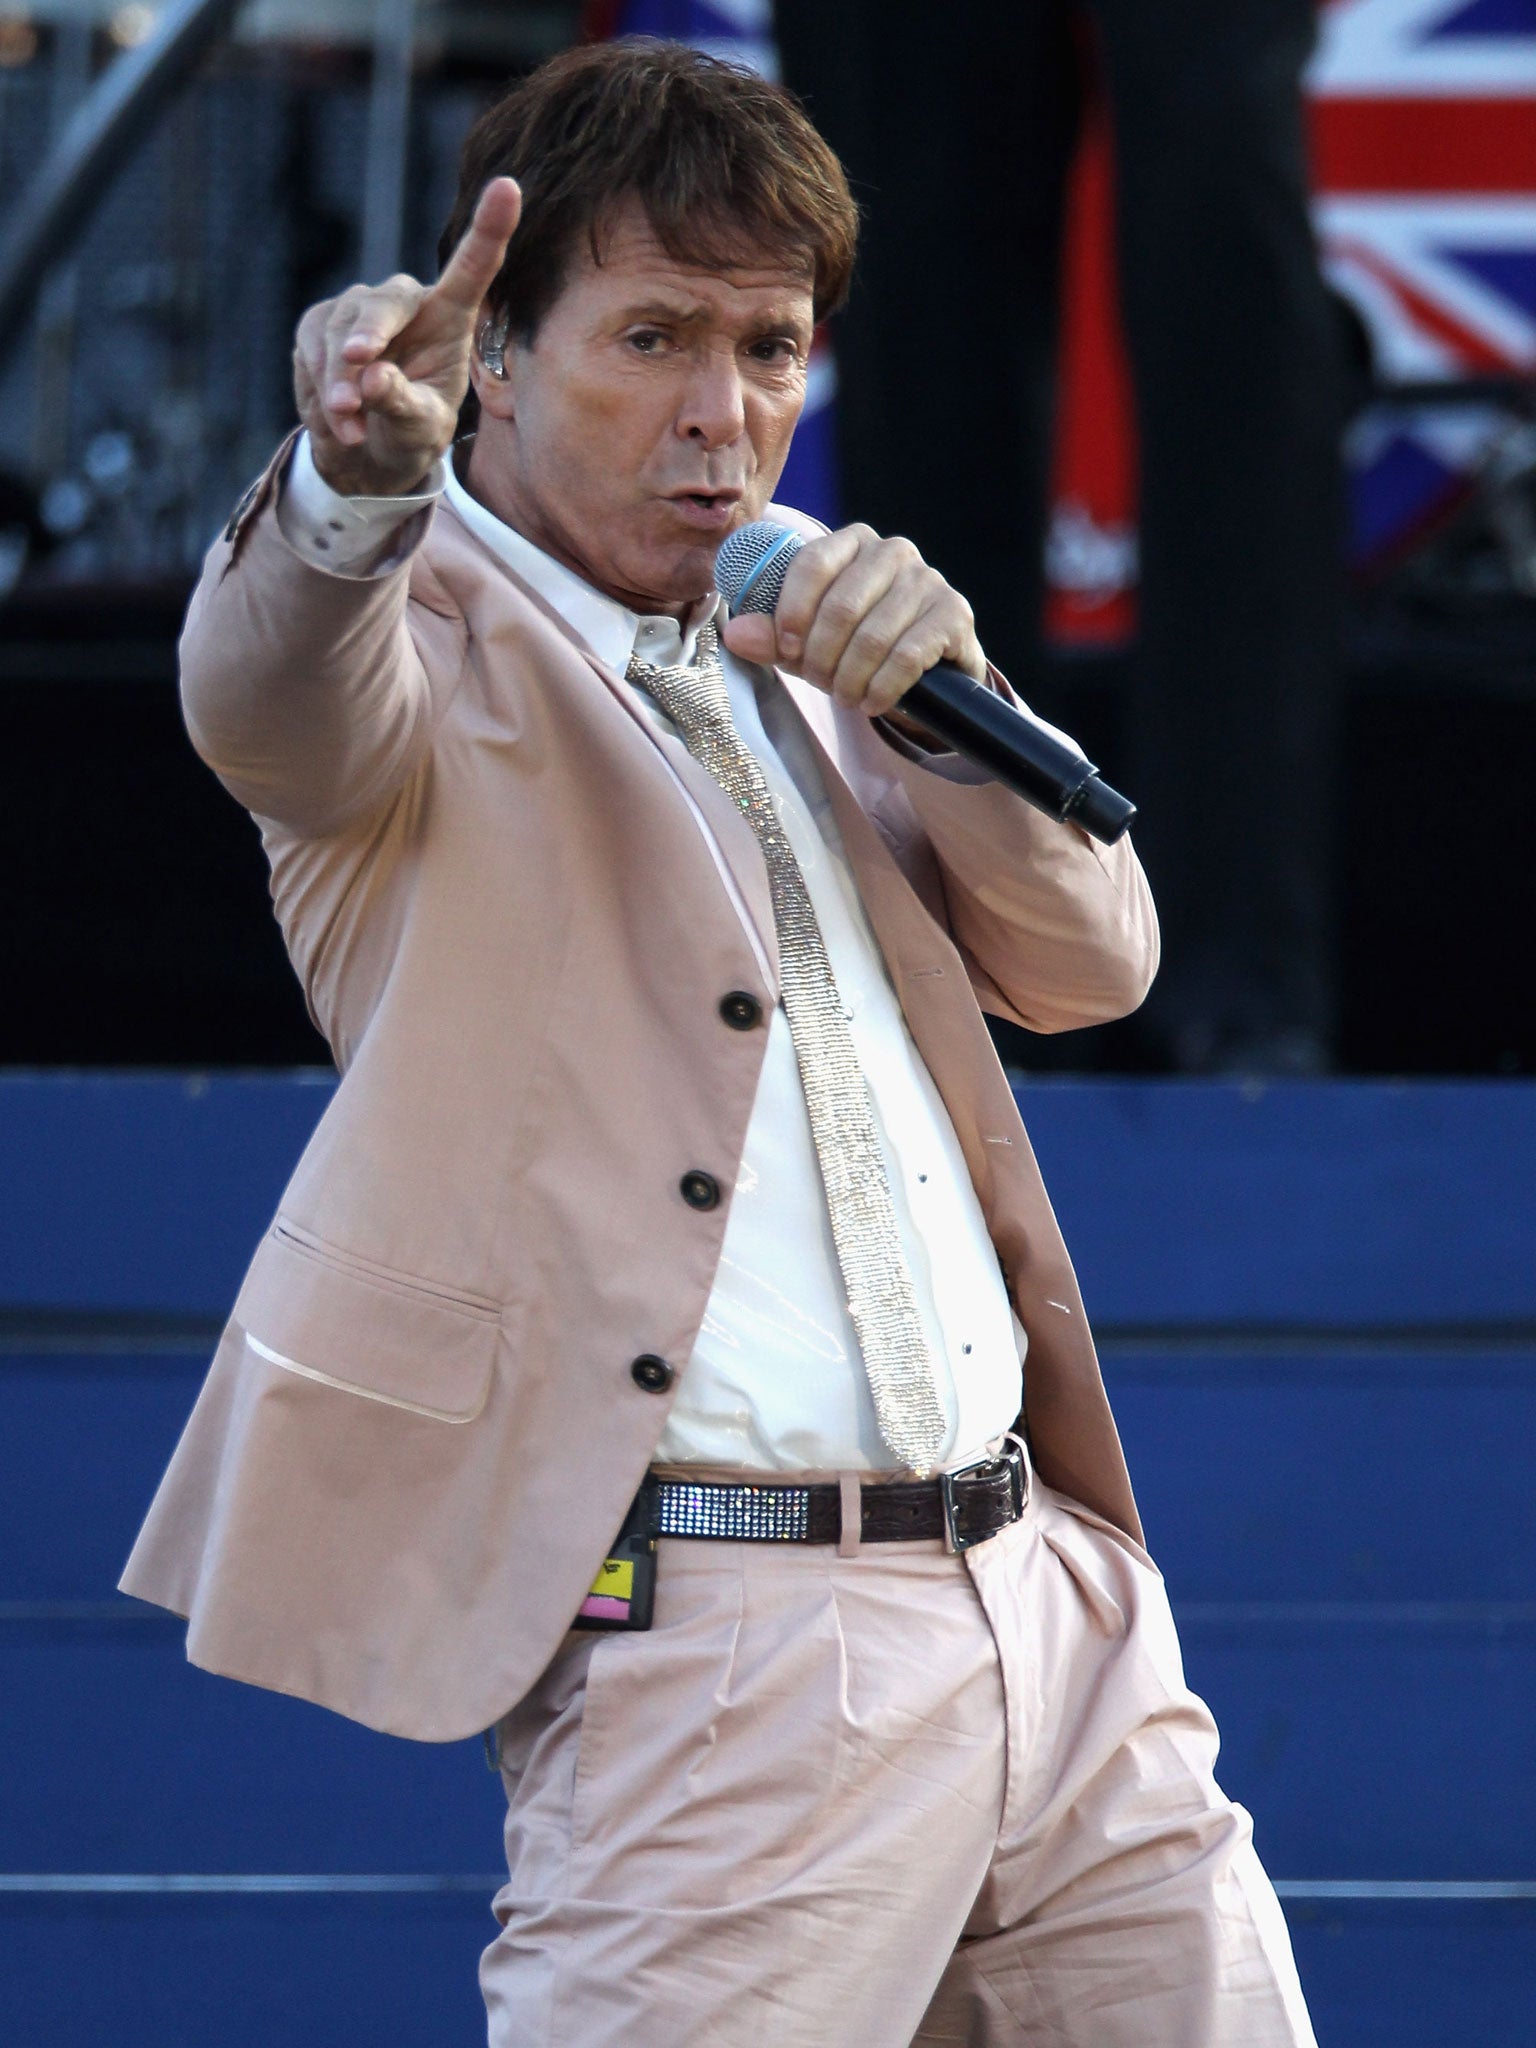 Cliff Richard, musician